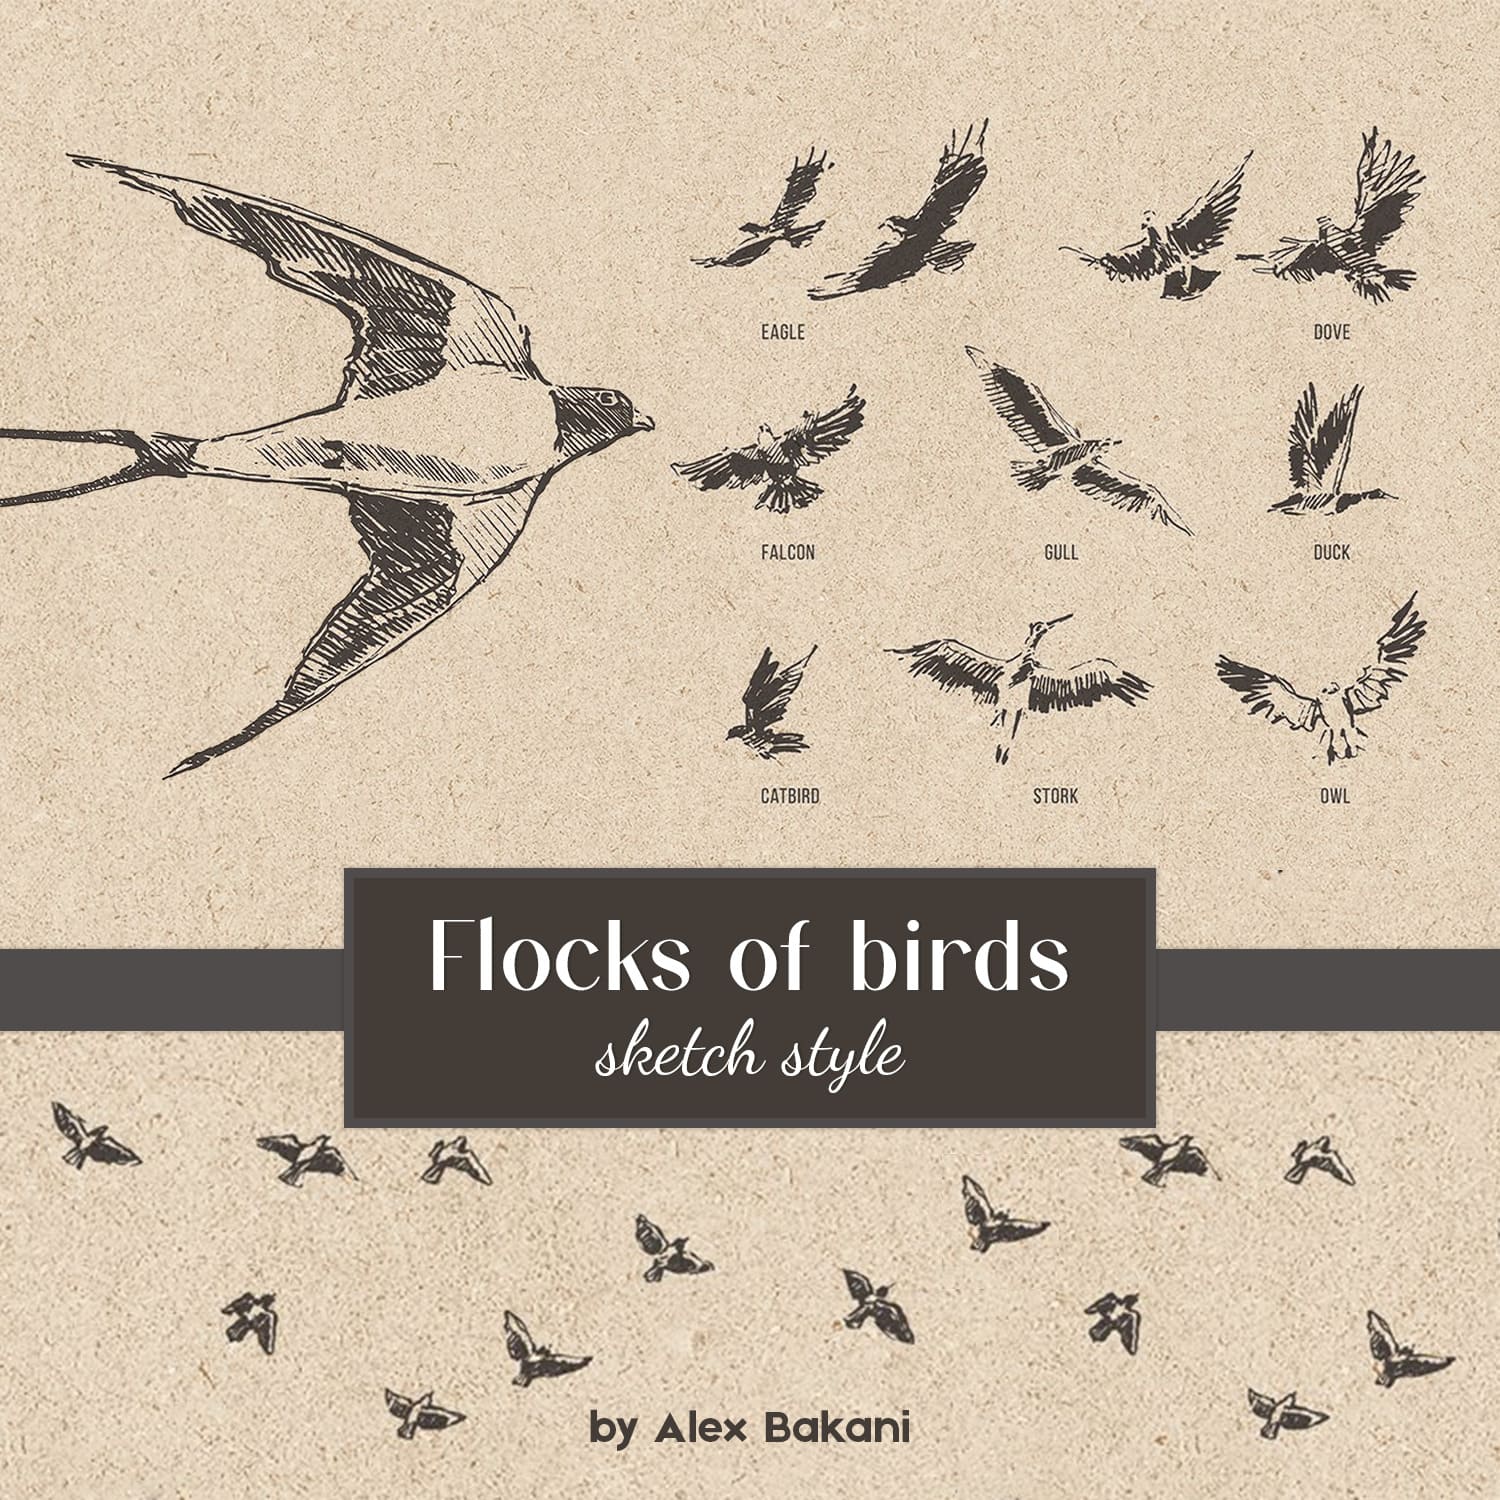 flocks of birds sketch style illustrations.